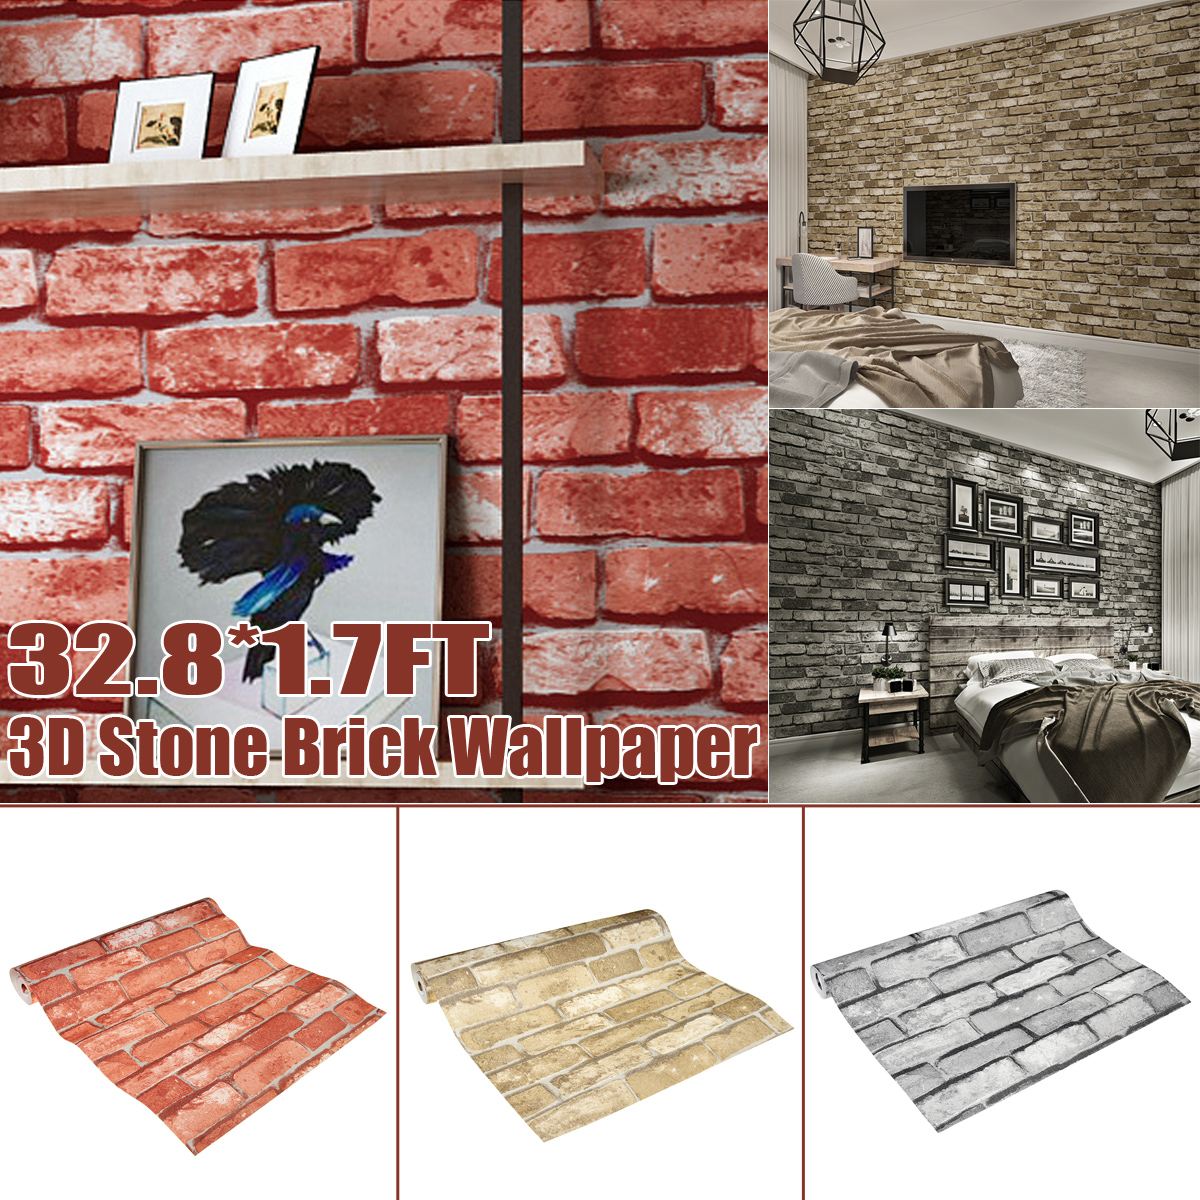 3D-Effect-Slate-Brick-Wall-Decal-Sticker-Faux-Self-adhesive-Wallpaper-TV-Wall-Decor-Sticke-1745700-2